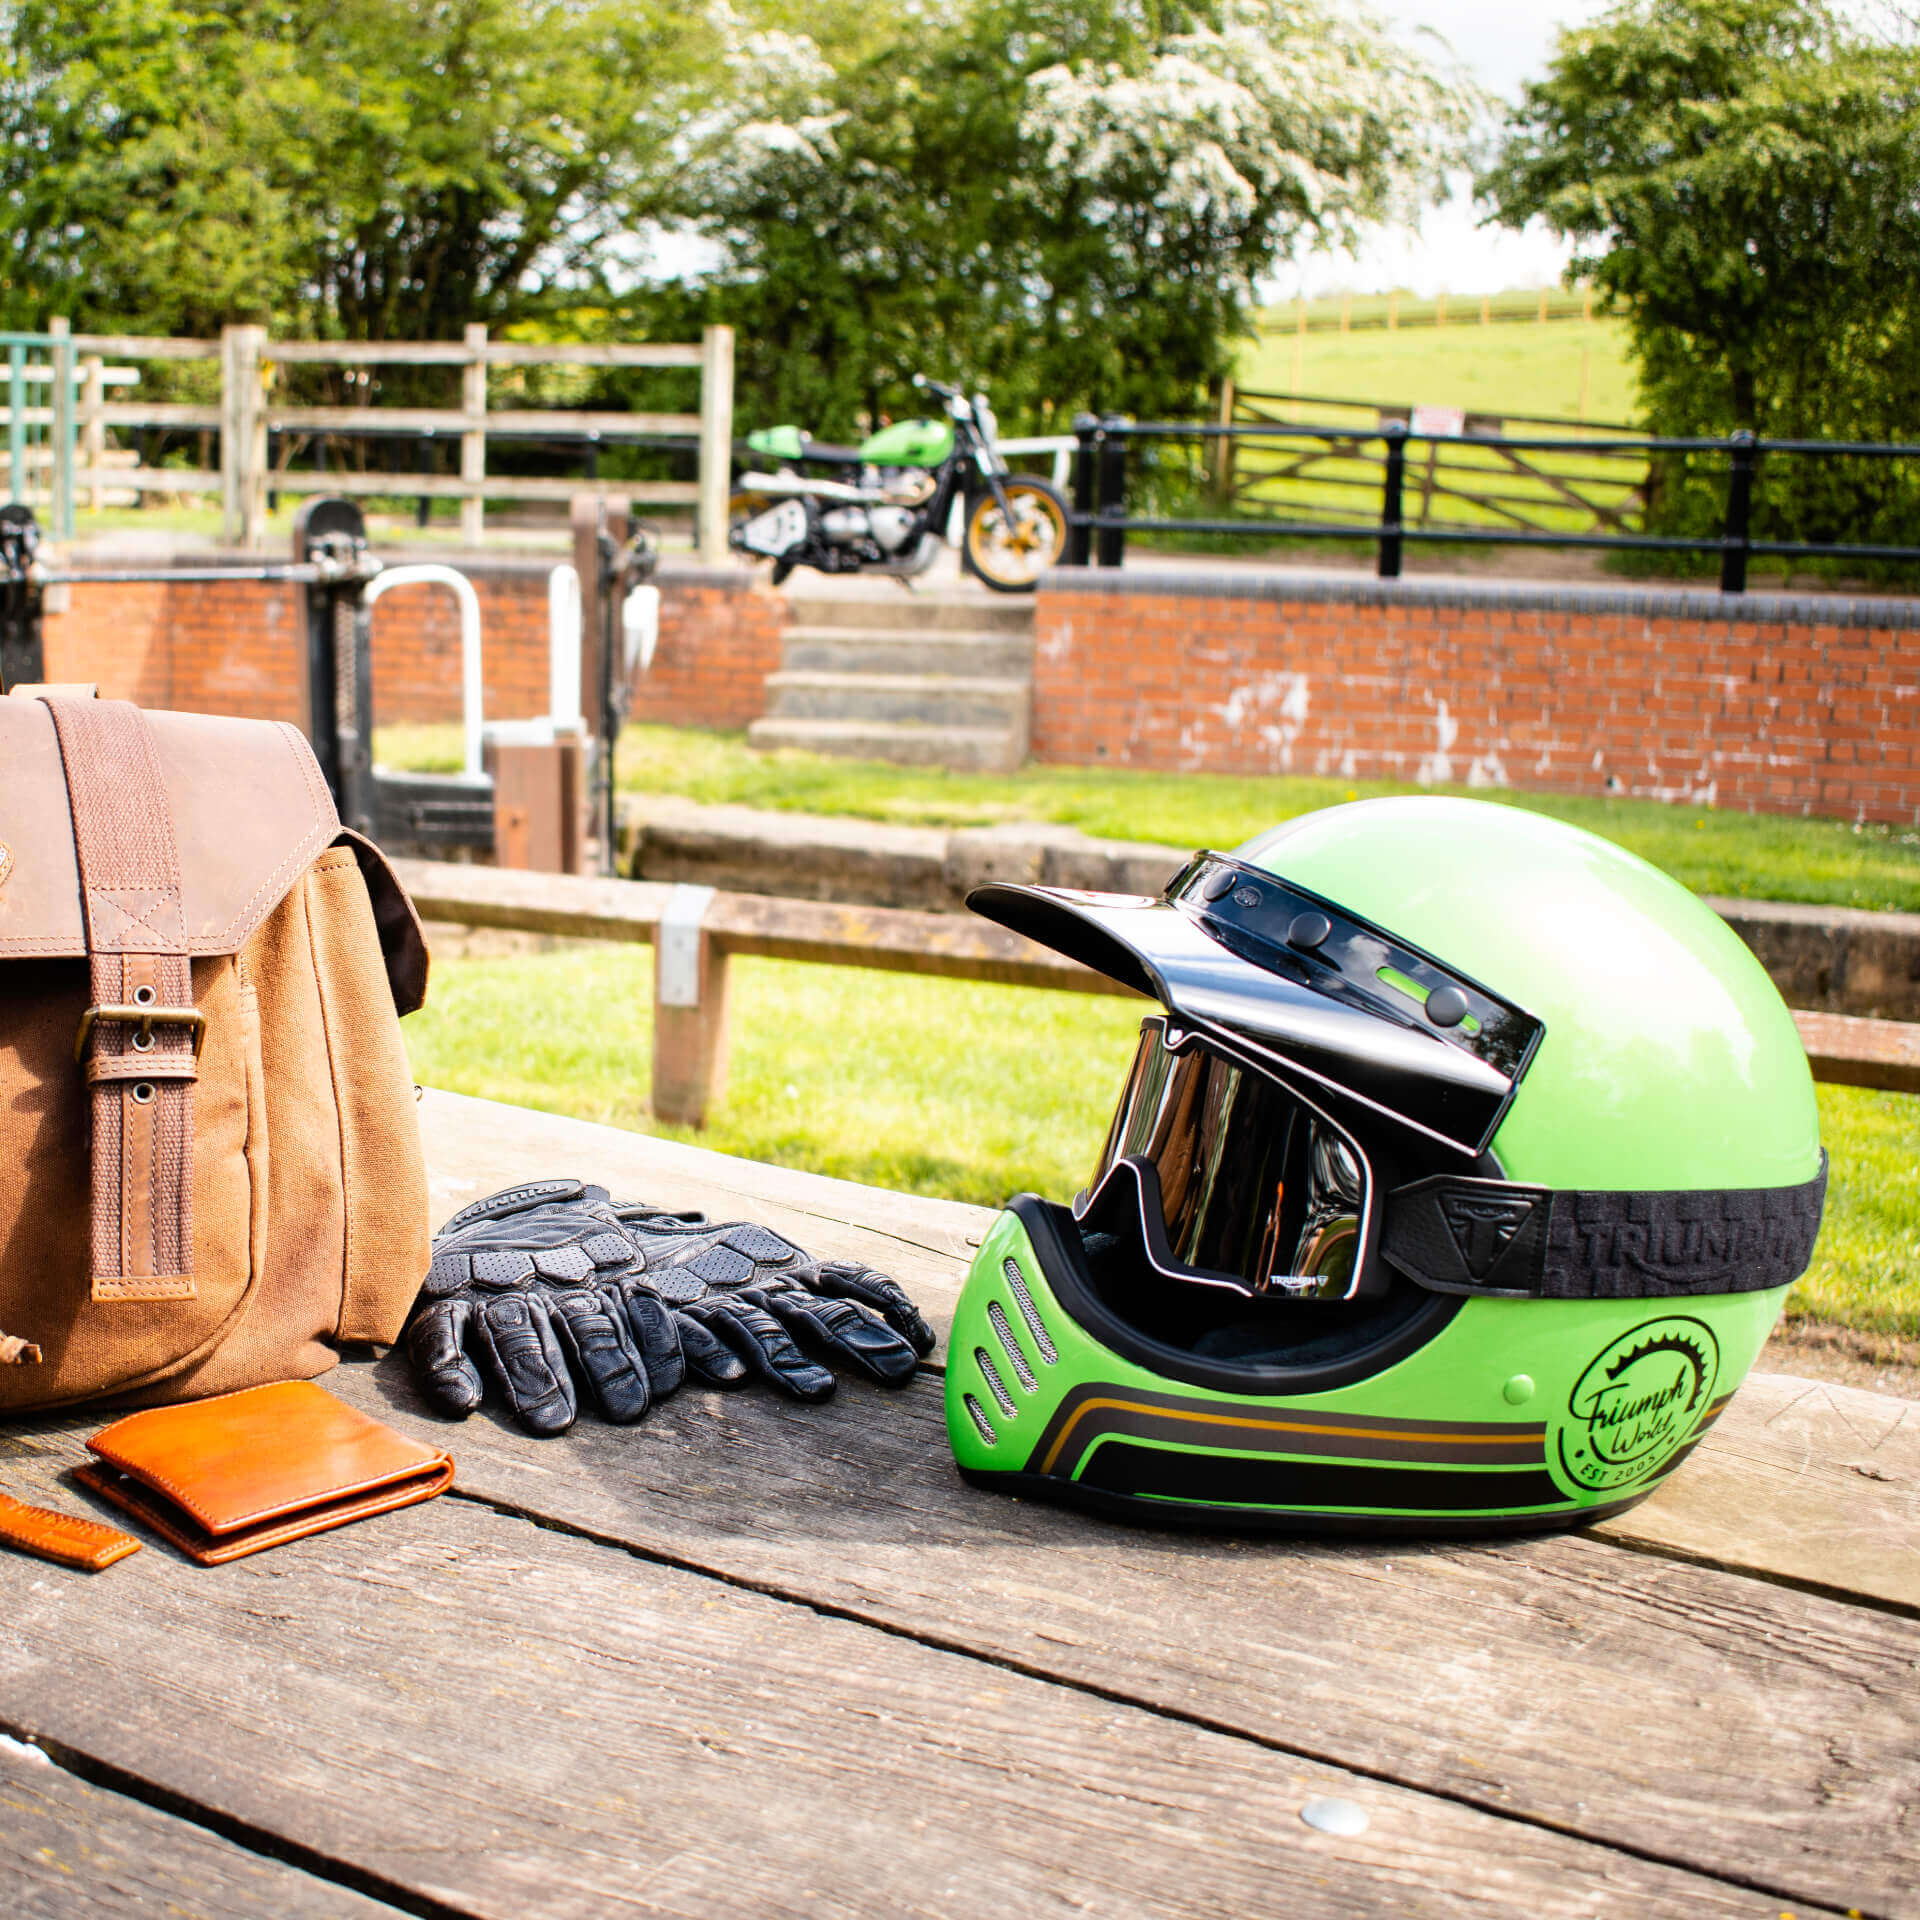 Motorbike helmet and accessories